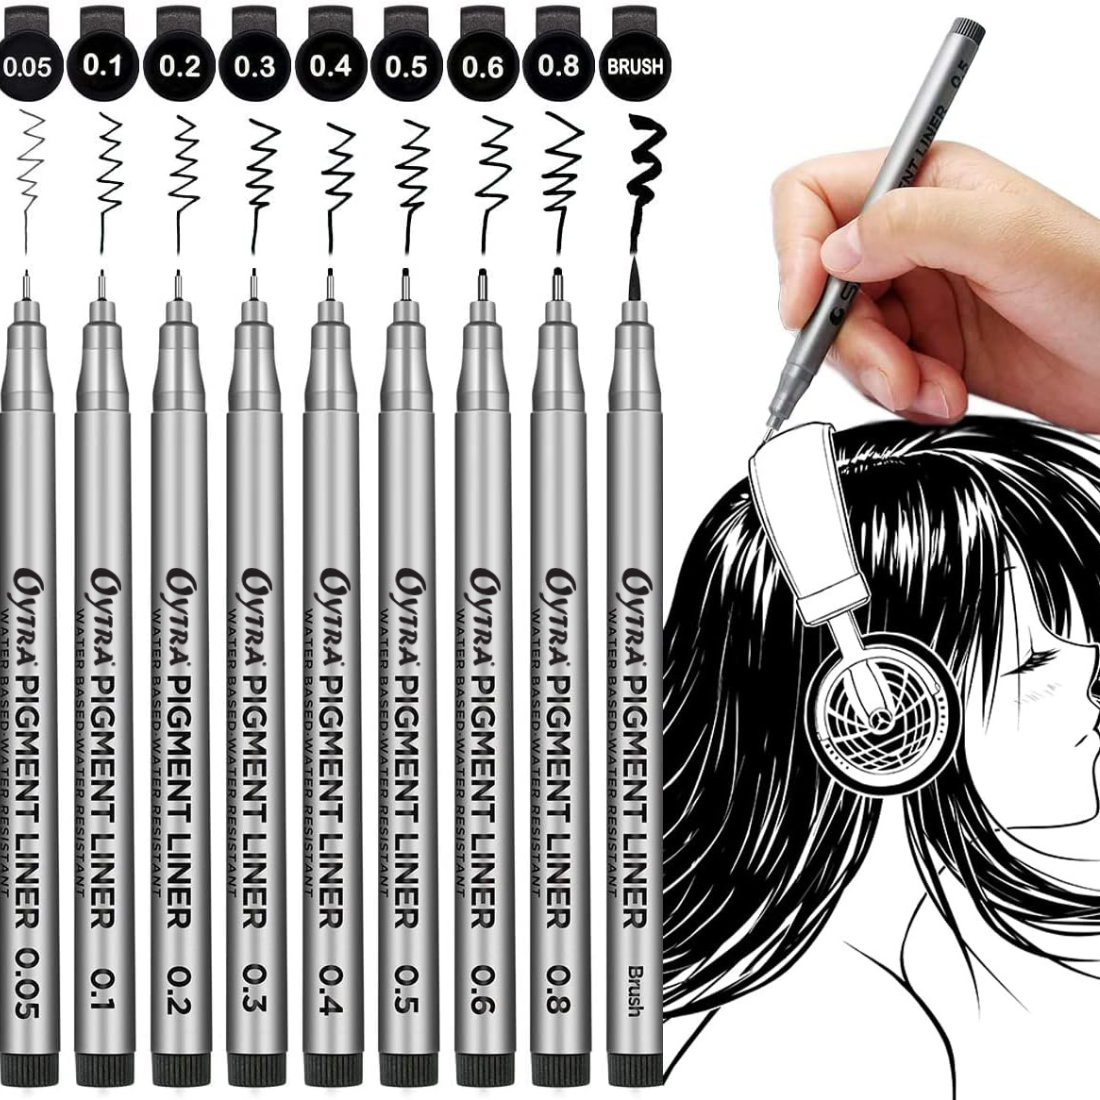 Pens,Colored Pens,Fine Tip Pens,24Pc 0.4Mm Journaling Pens,Colored